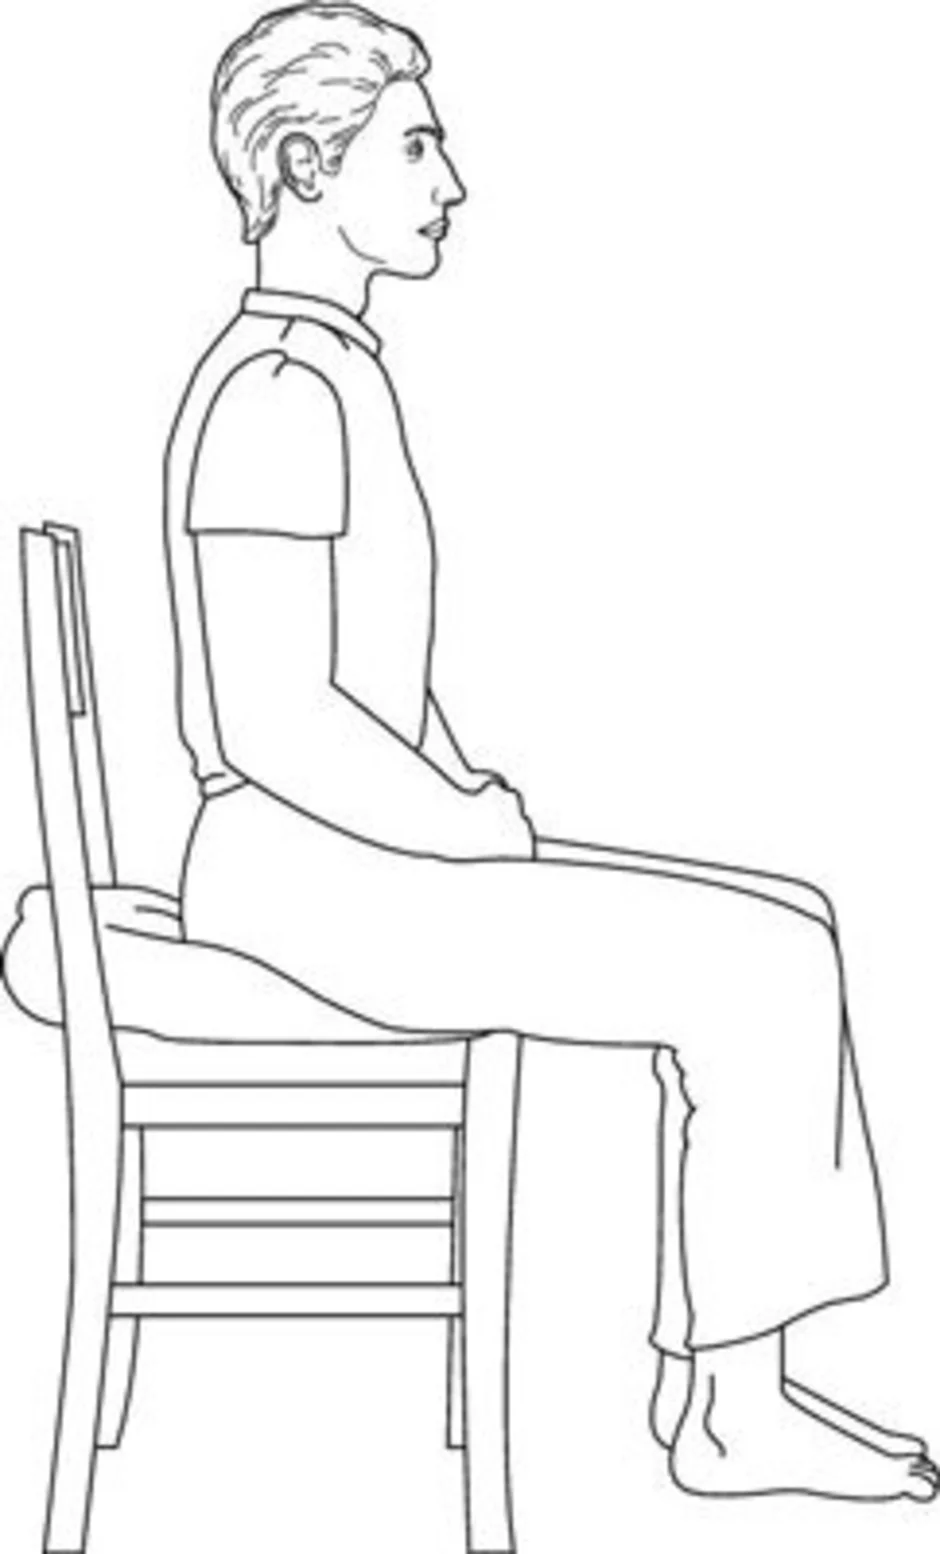 Человек сидит на стуле